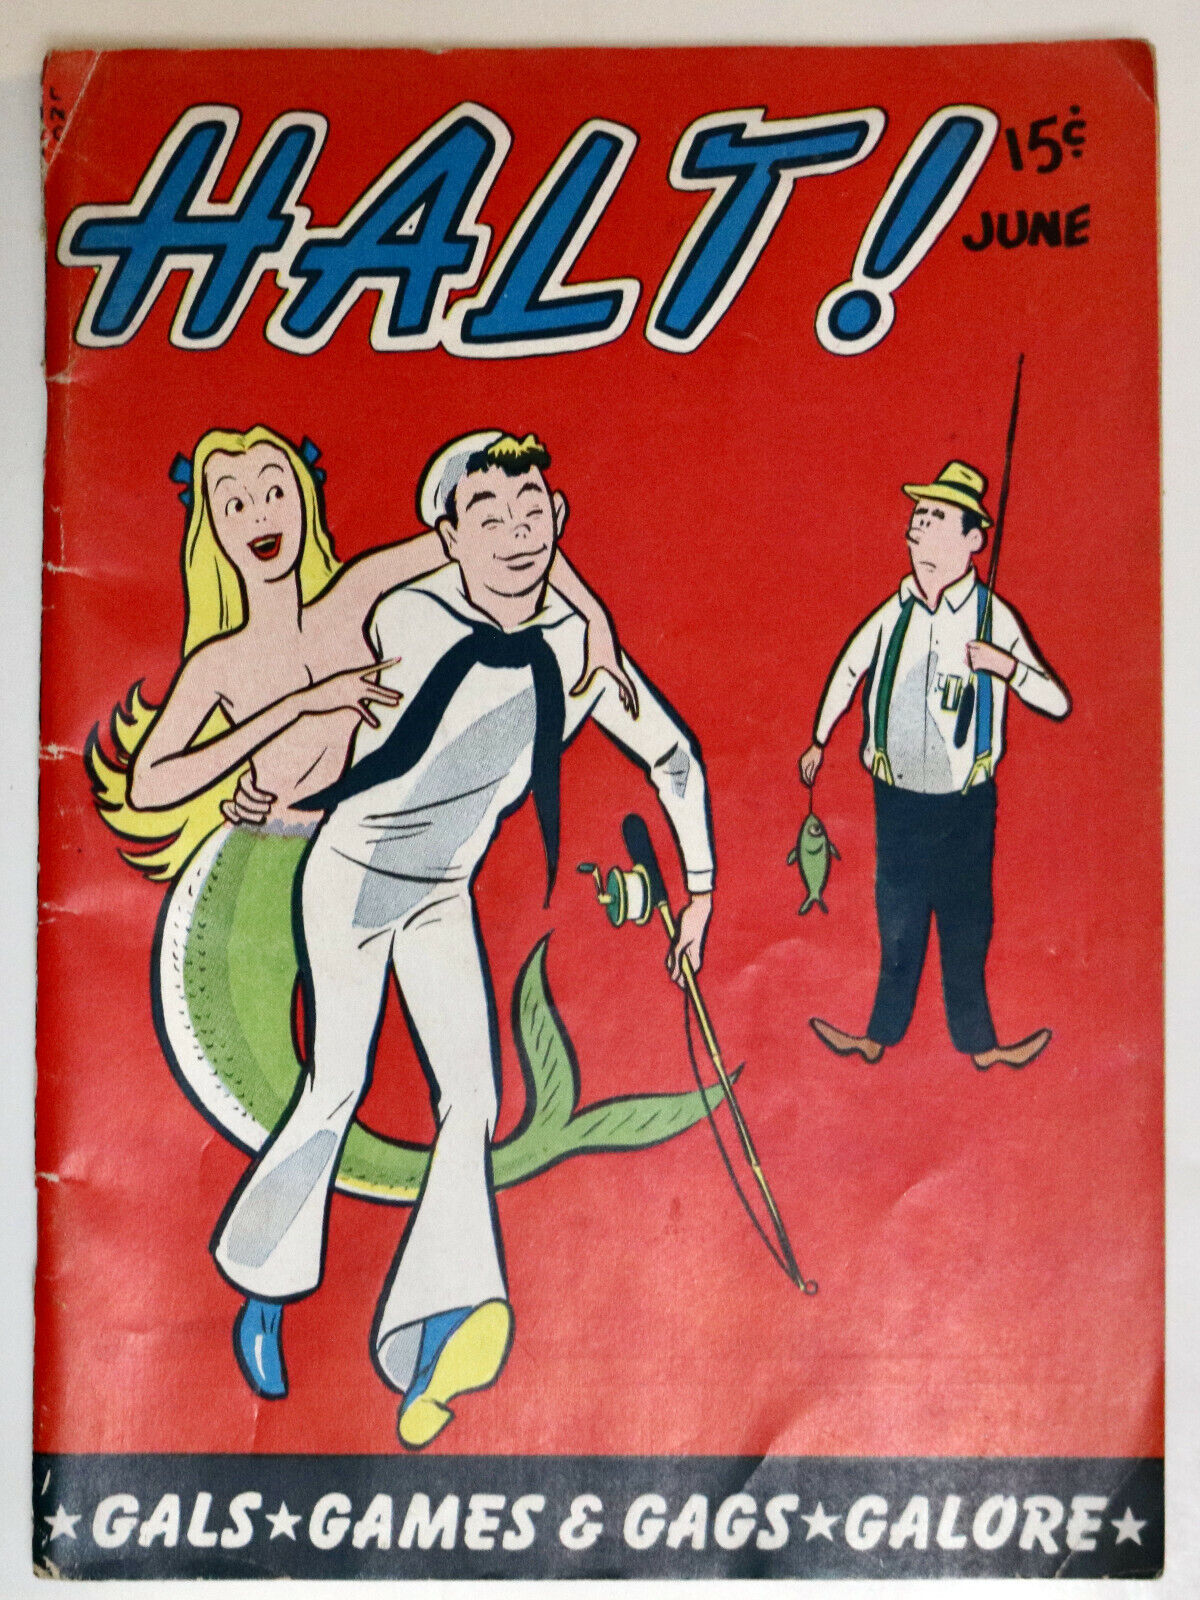 HALT comic book Crestwood Publishing June 1946 Vol 5 No 7  war time military